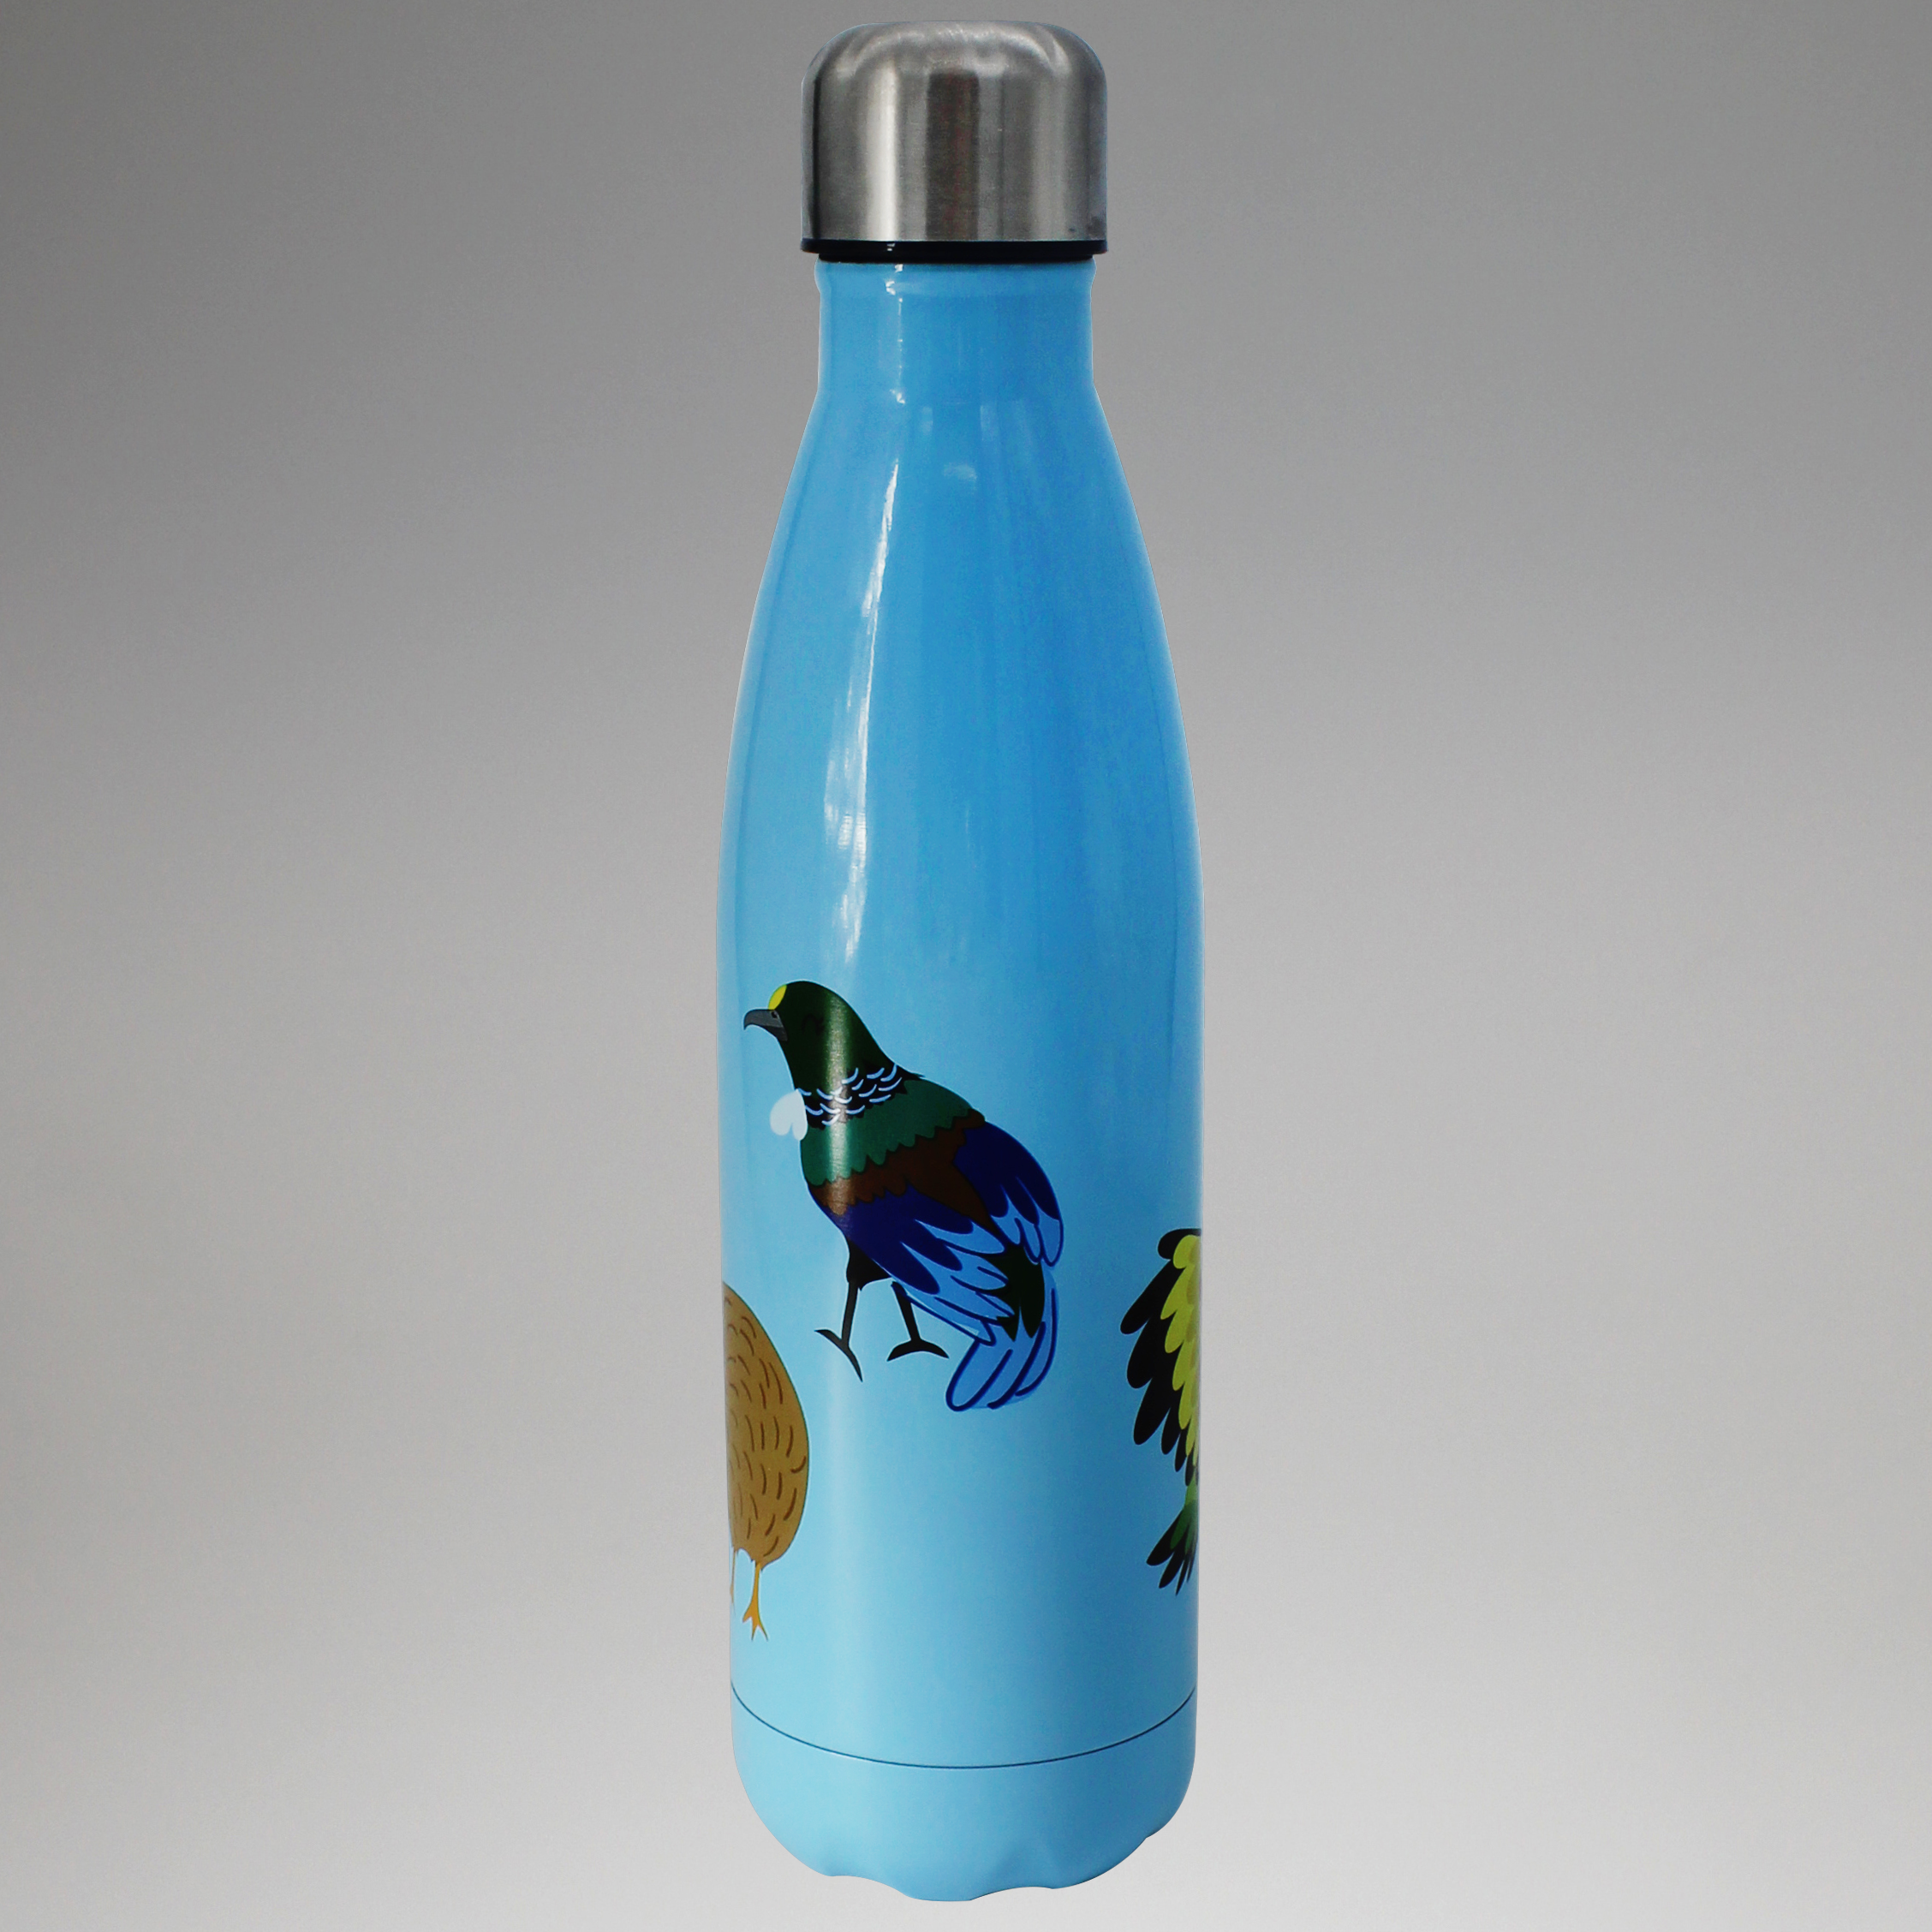 Kiwi Birds Drink Bottle - 500ml